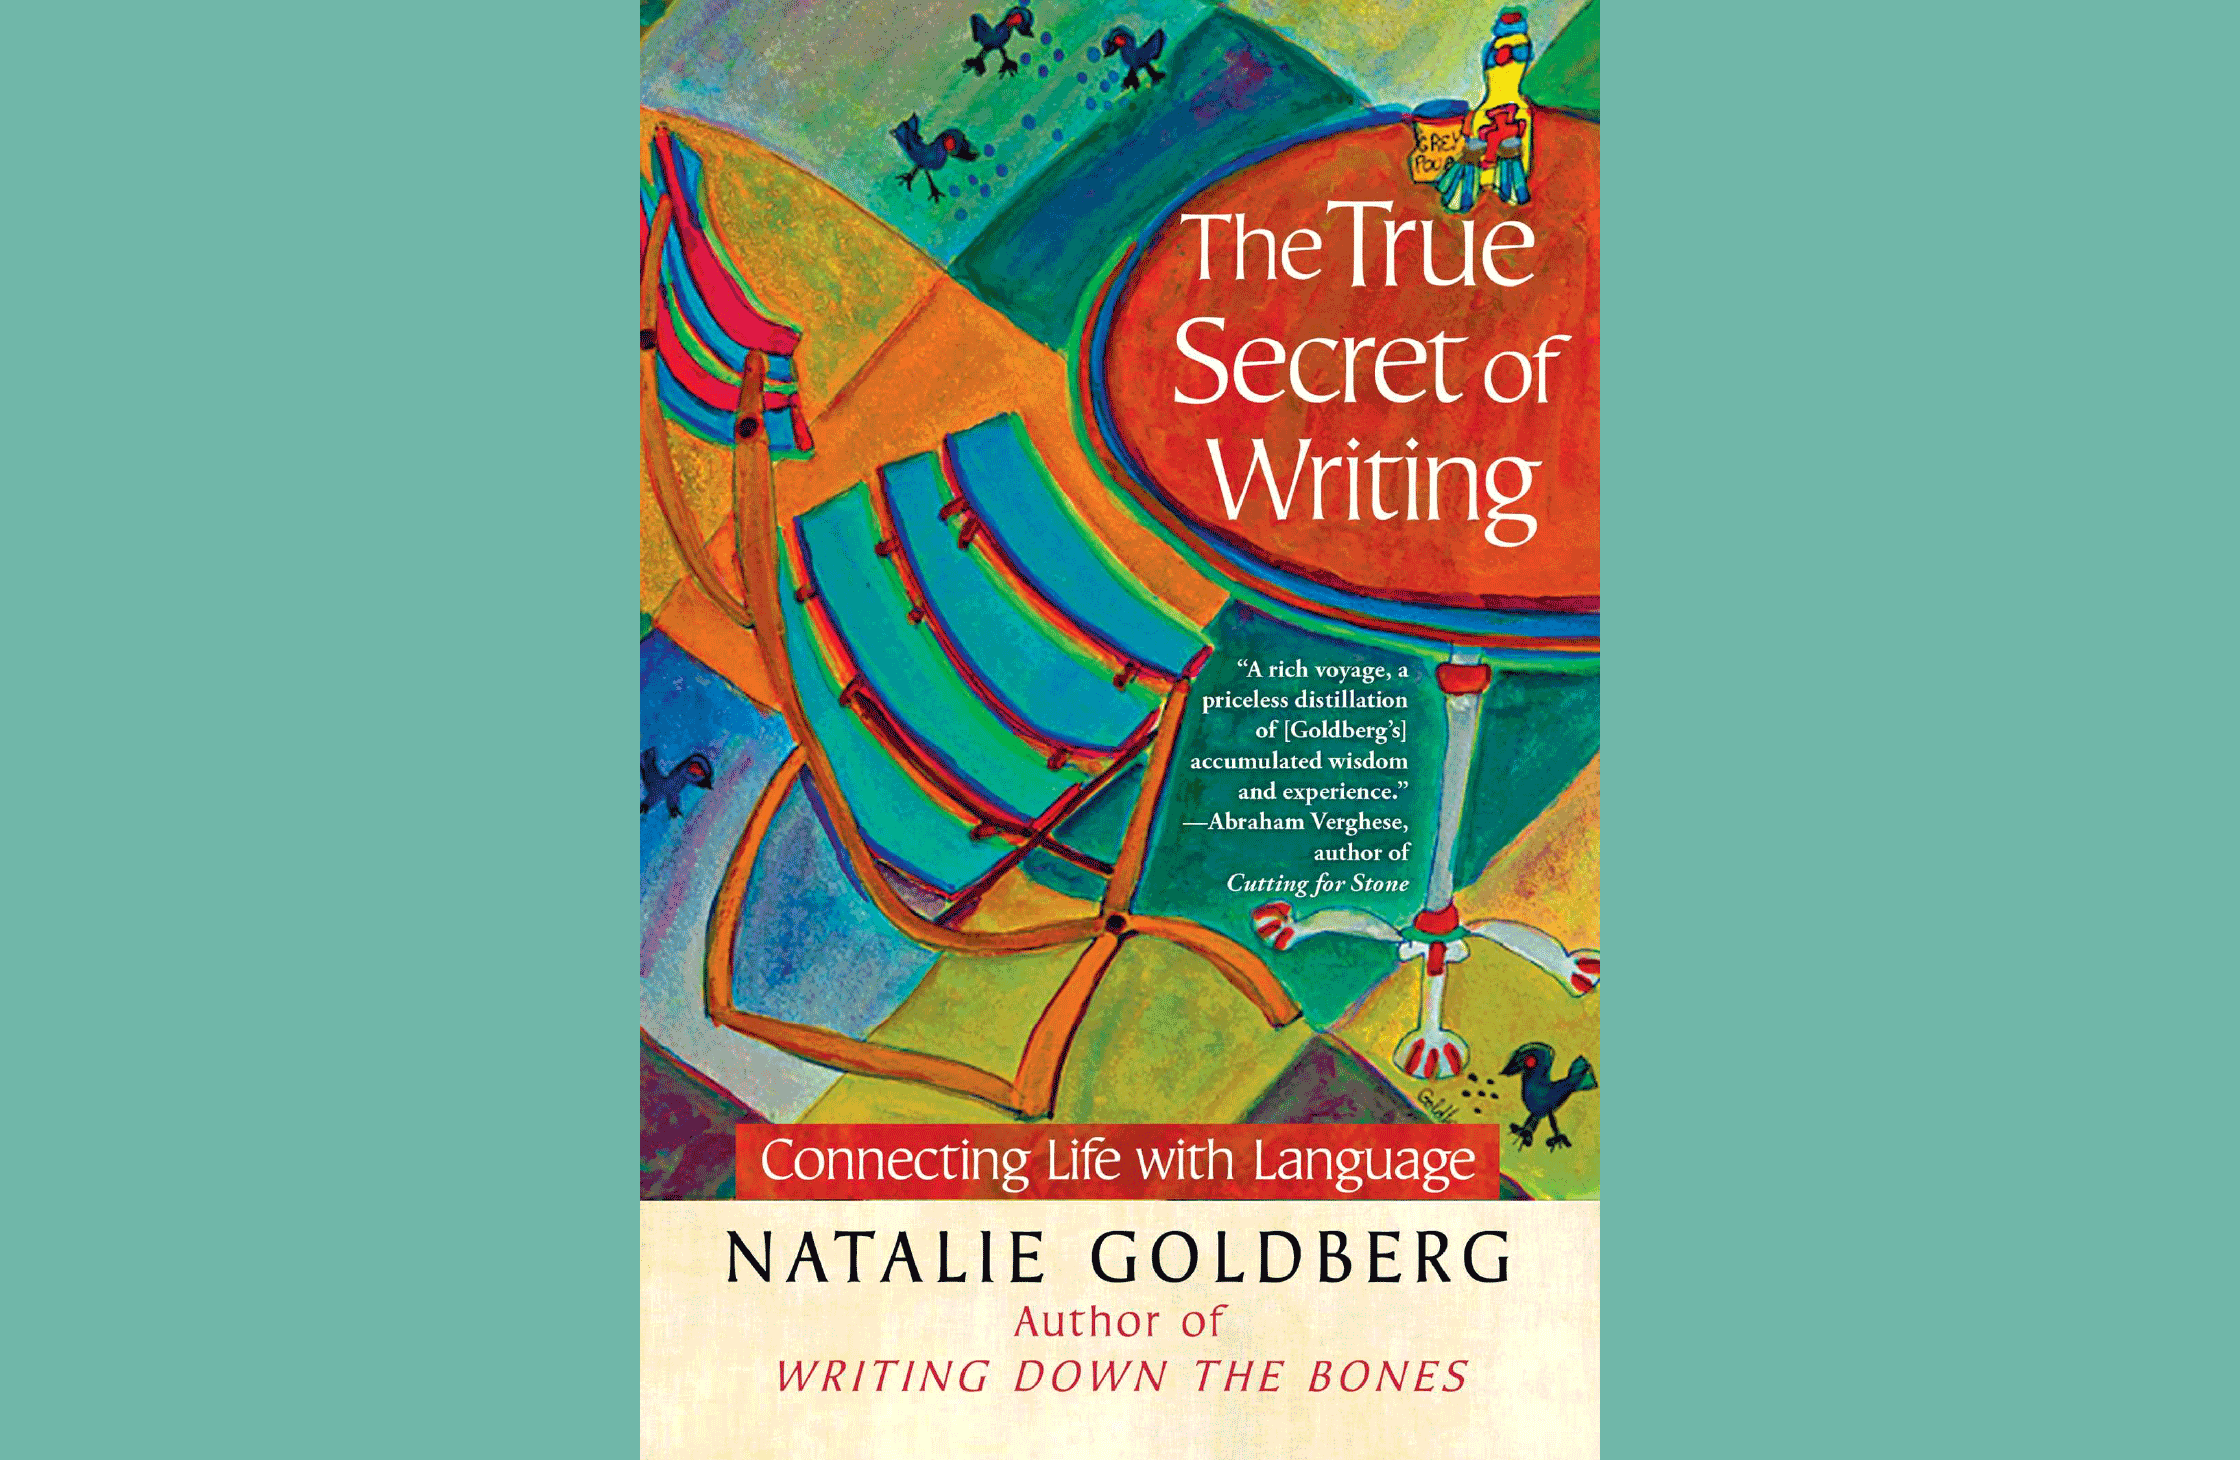 Summary: The True Secret of Writing by Natalie Goldberg